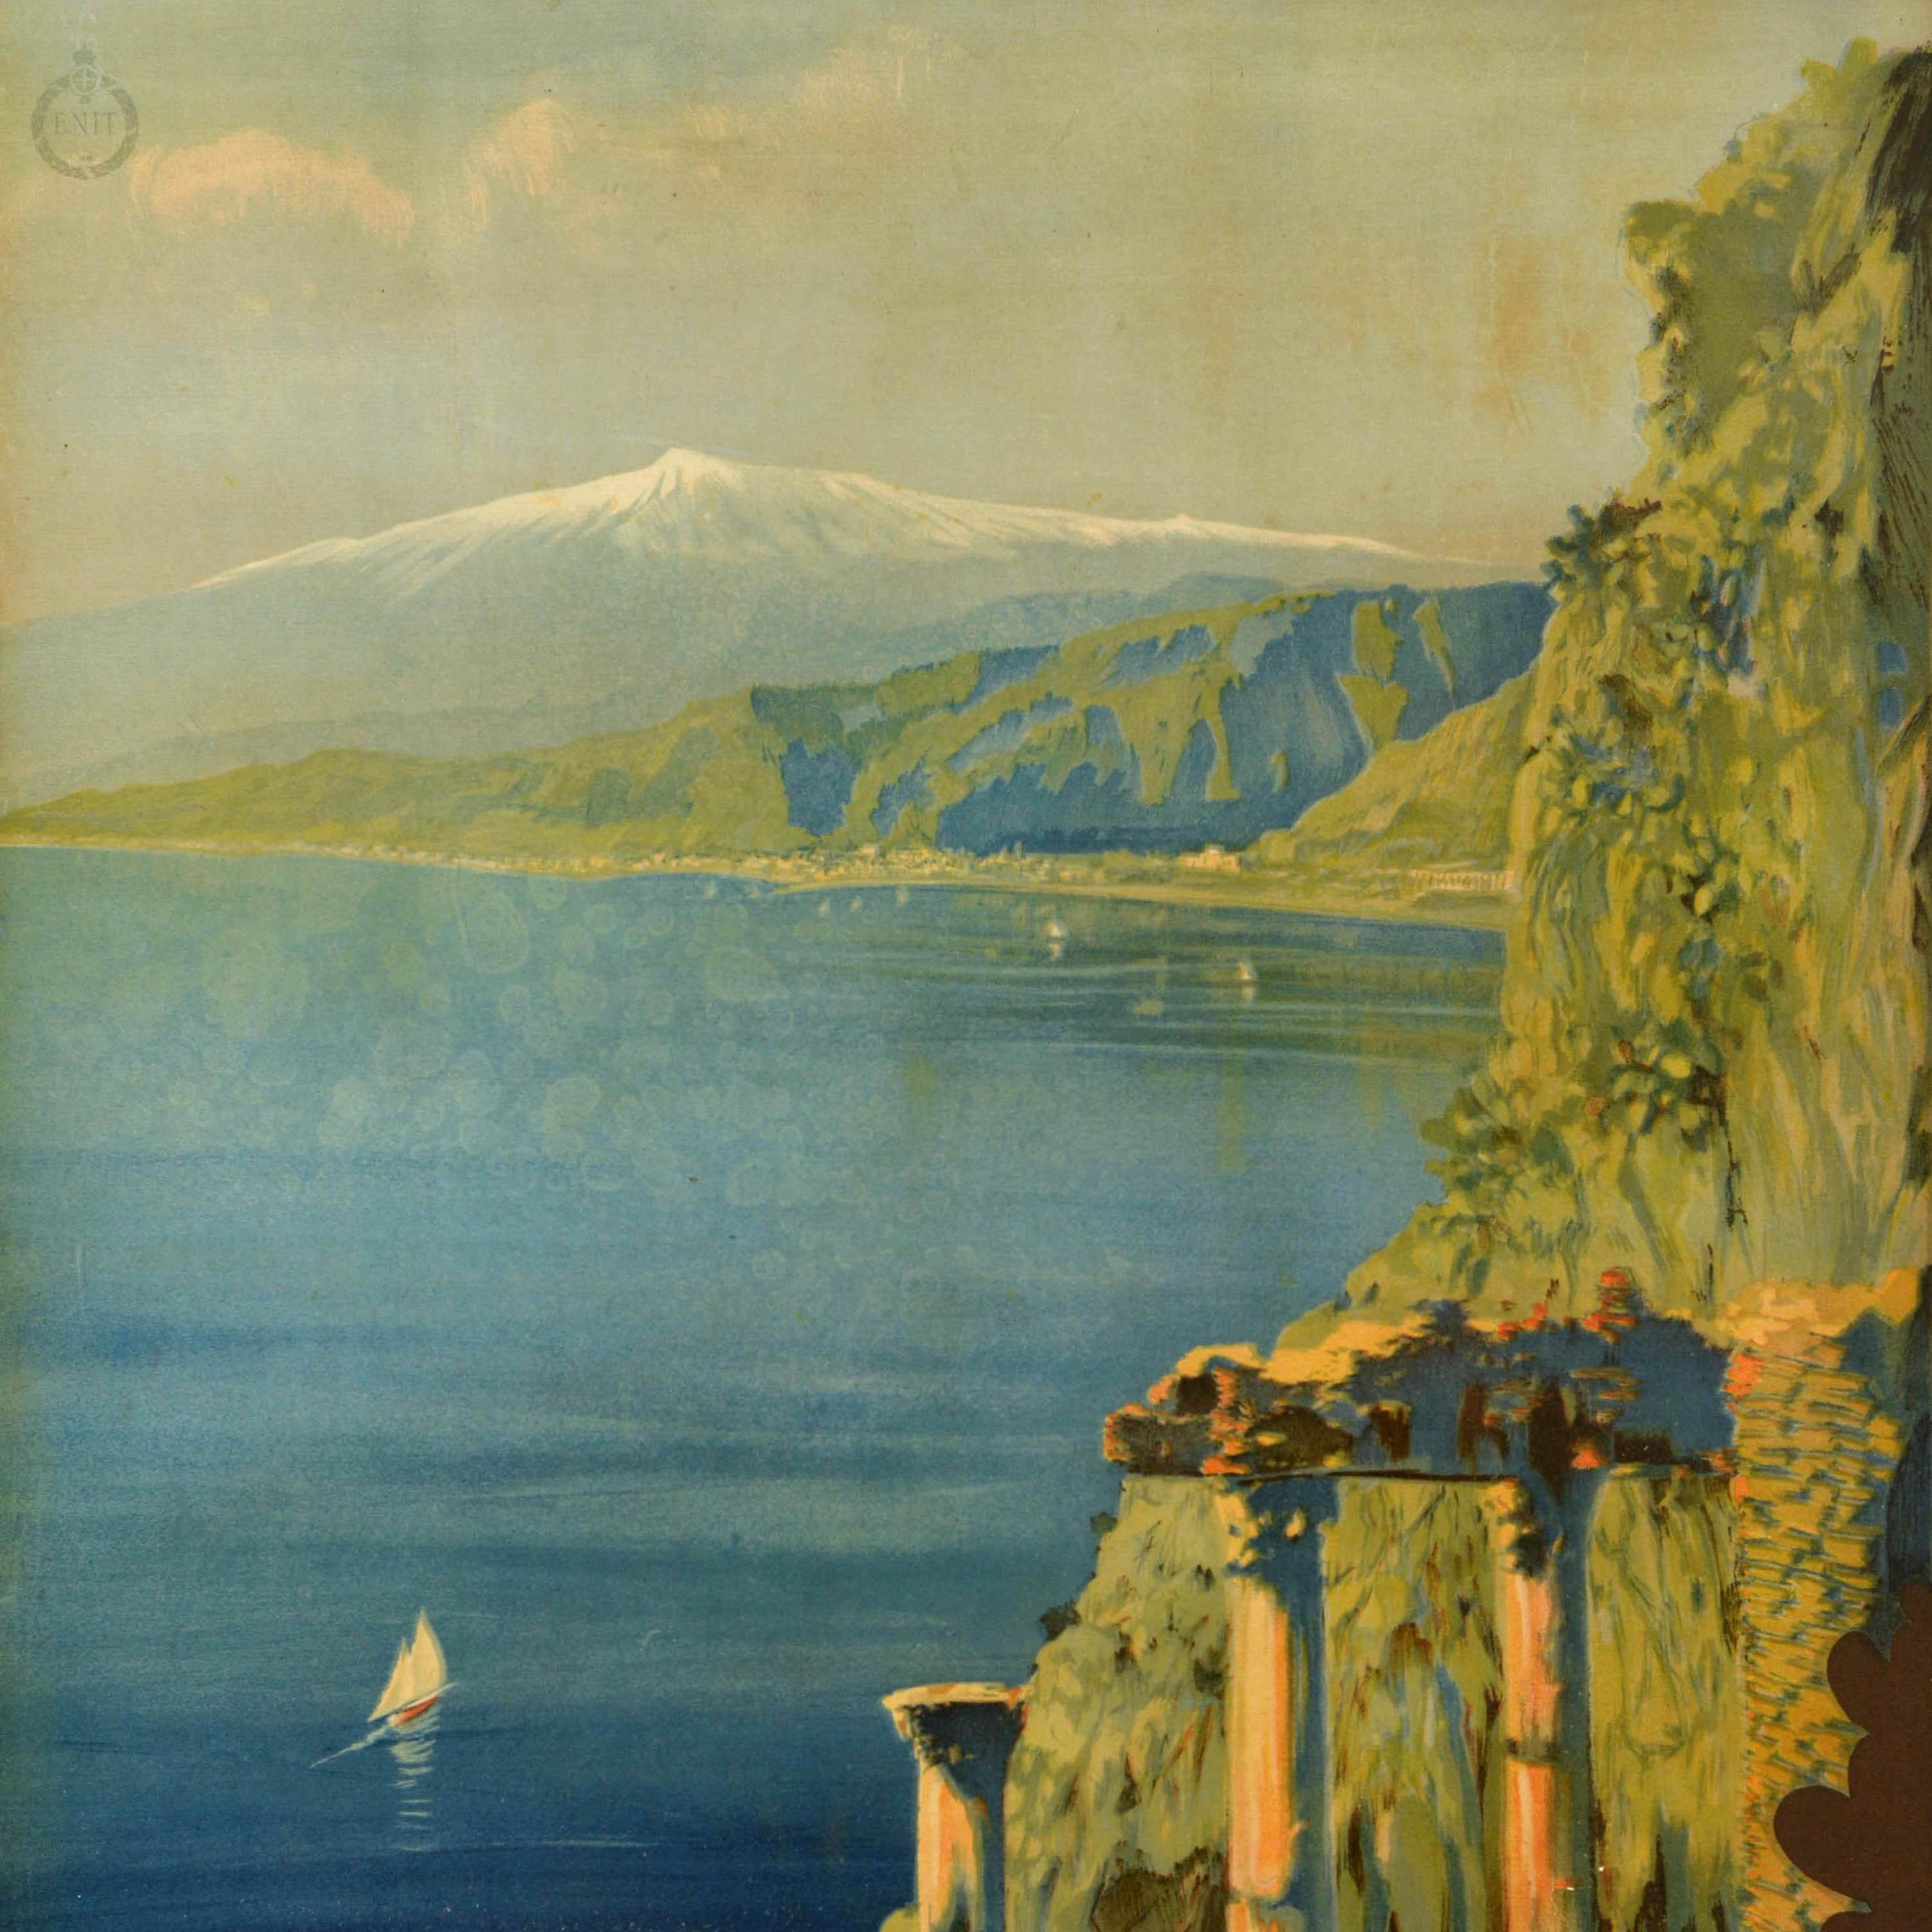 Original Vintage Travel Poster Taormina Sicily ENIT Italy Mt Etna Mario Borgoni For Sale 2